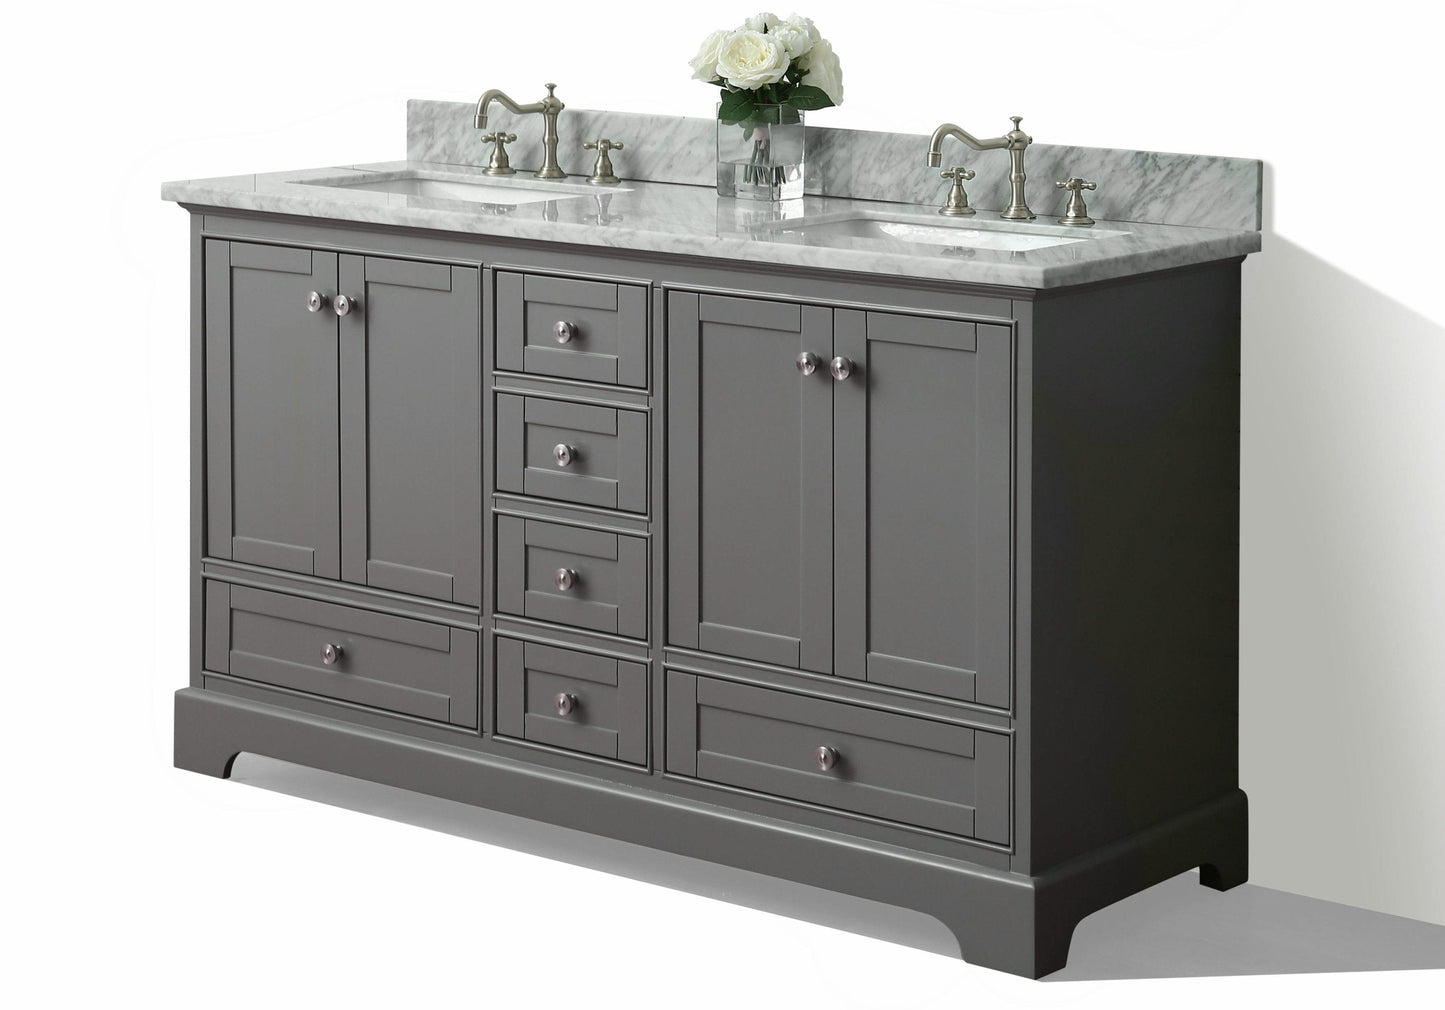 Ancerra Designs Audrey 72 in. Bath Vanity Set in Sapphire Gray